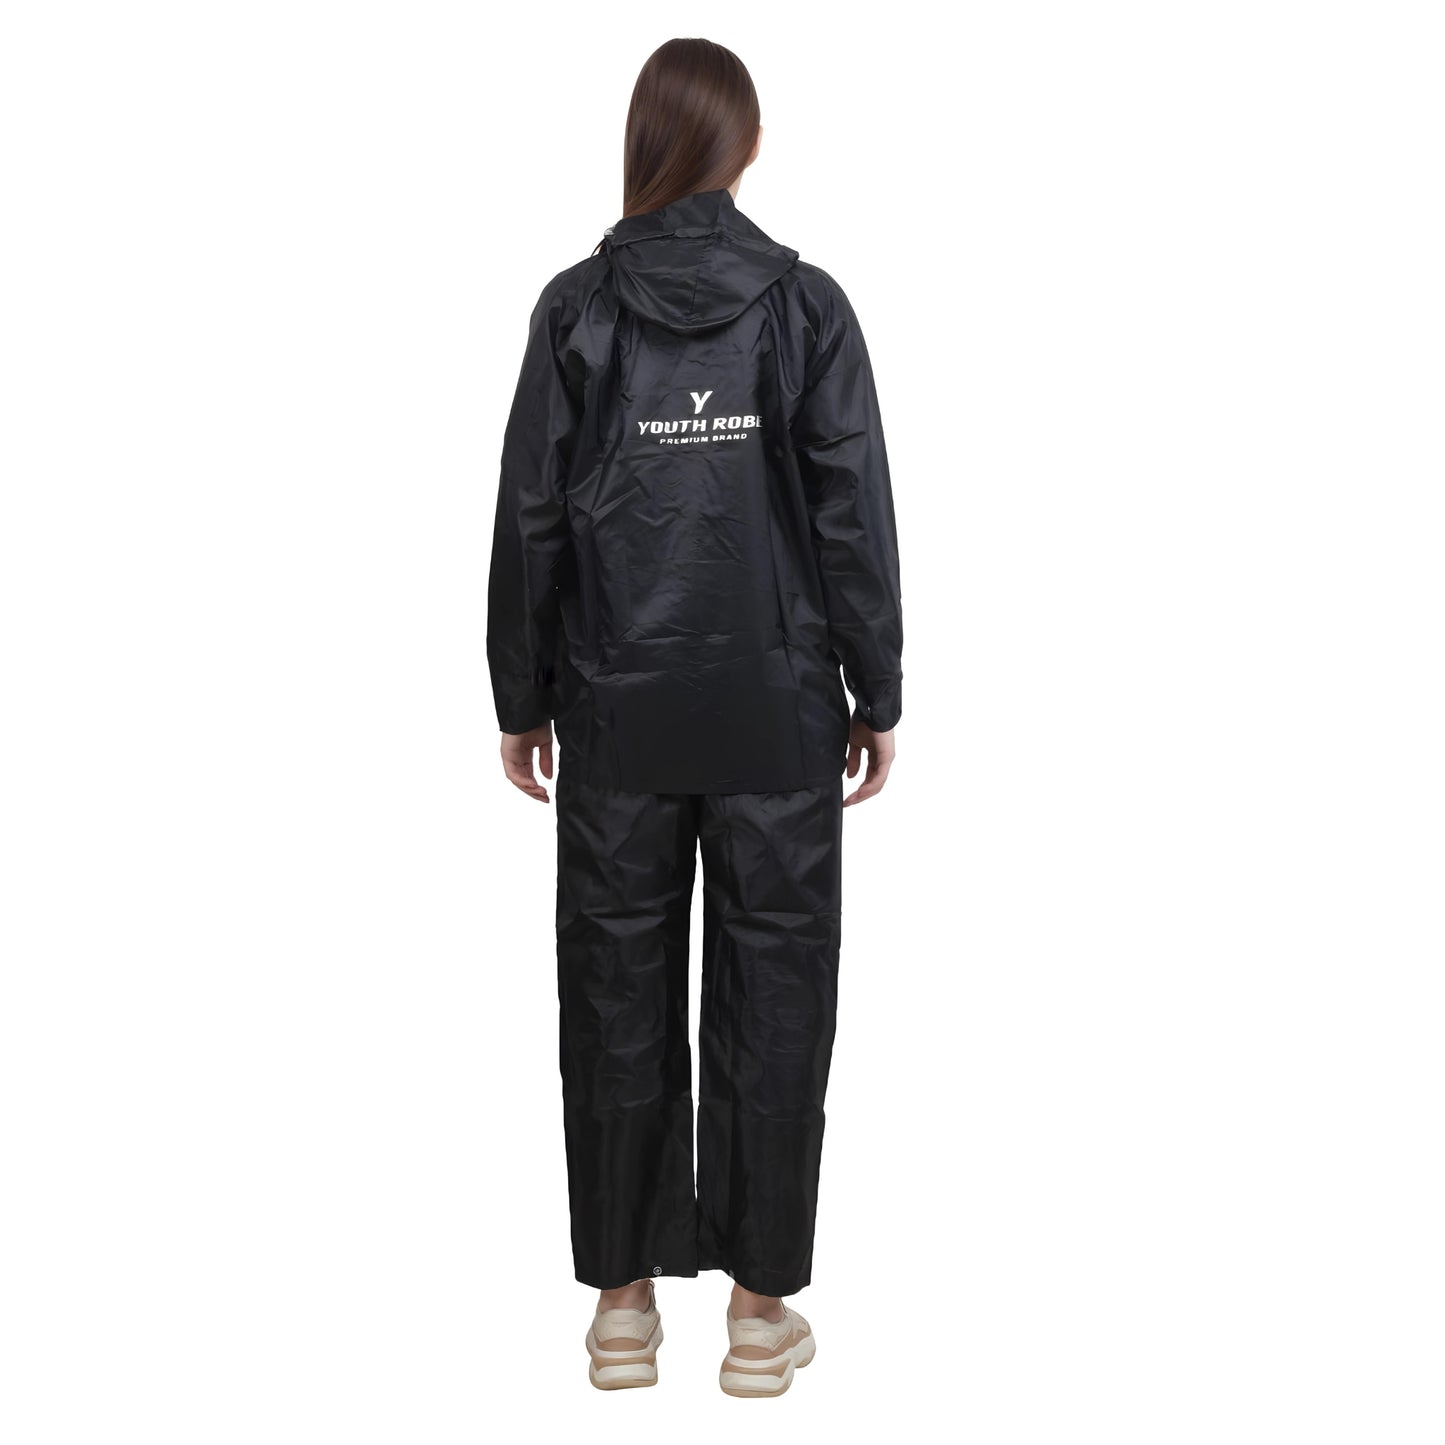 YOUTH ROBE Women's Raincoat - Black (Set)